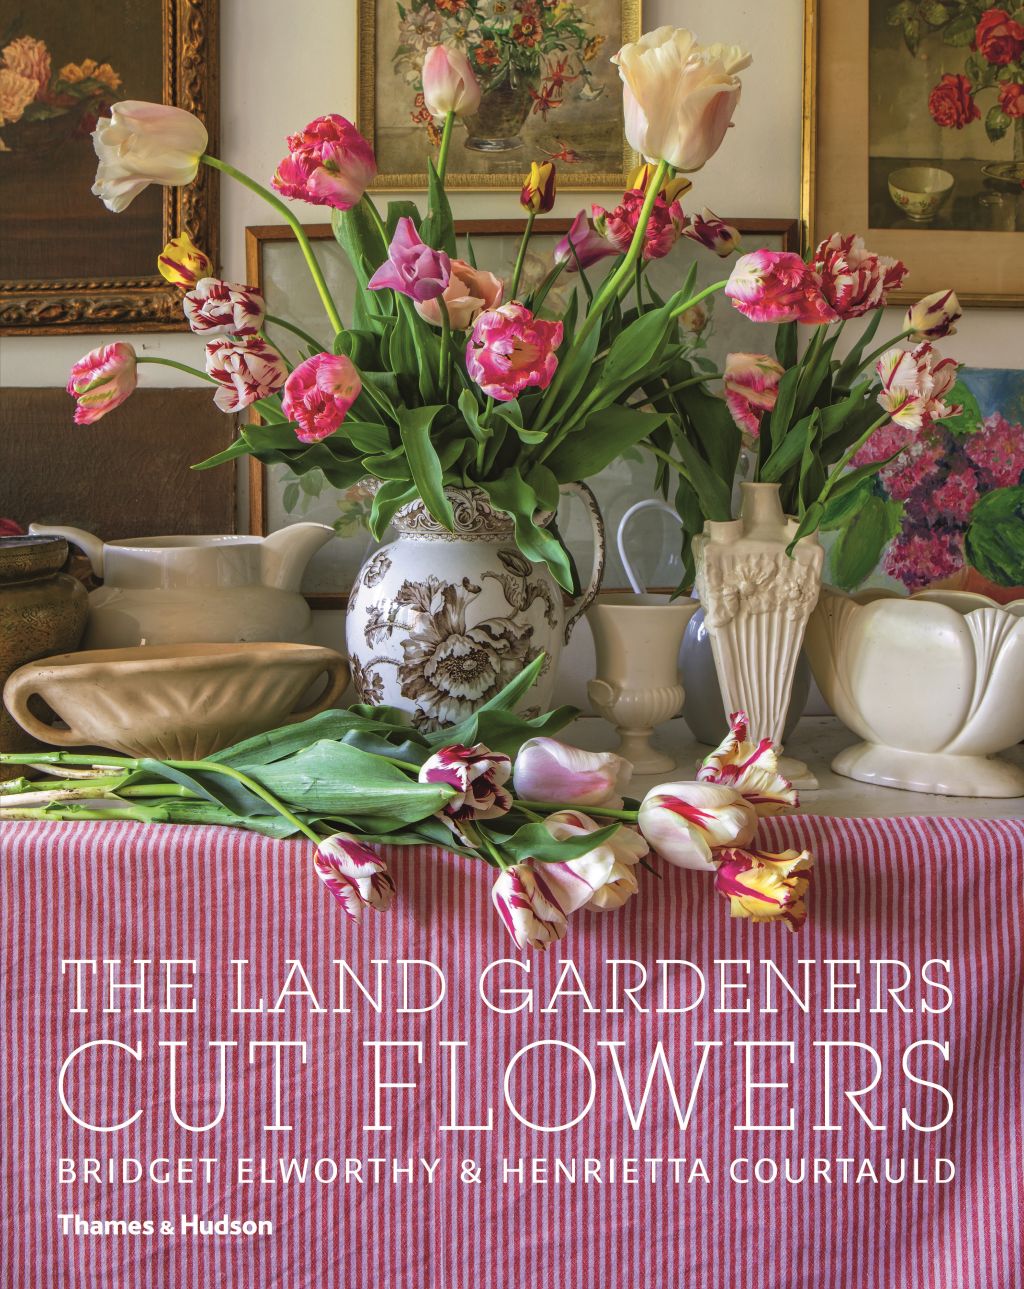 The Land Gardeners Cut Flowers by Bridget Elworthy and Henrietta Courtauld Photo: Supplied